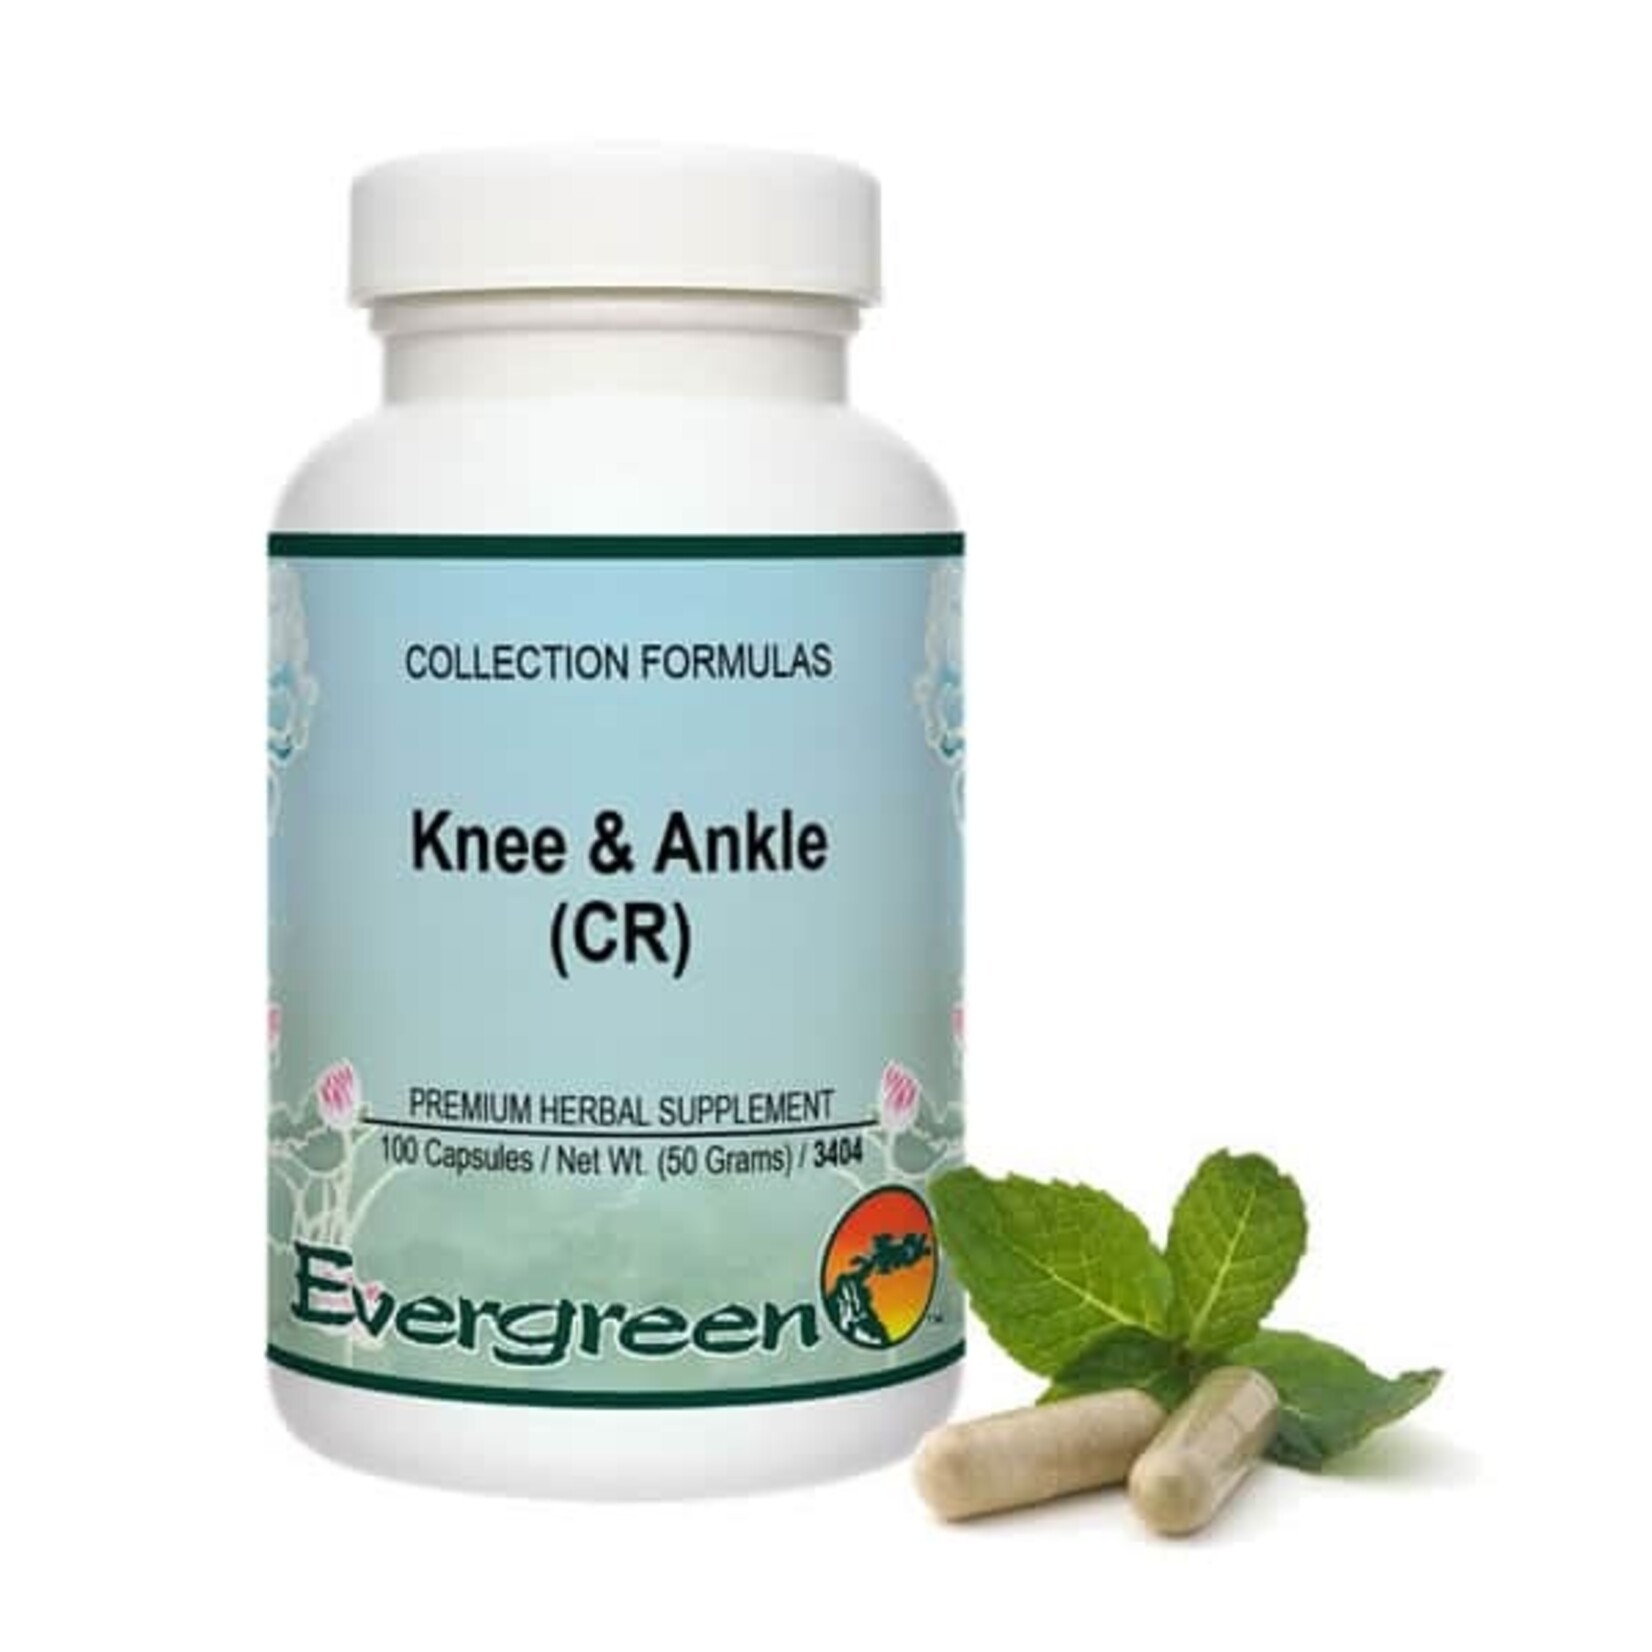 Knee & Ankle (CR) (Evergreen Herbs)